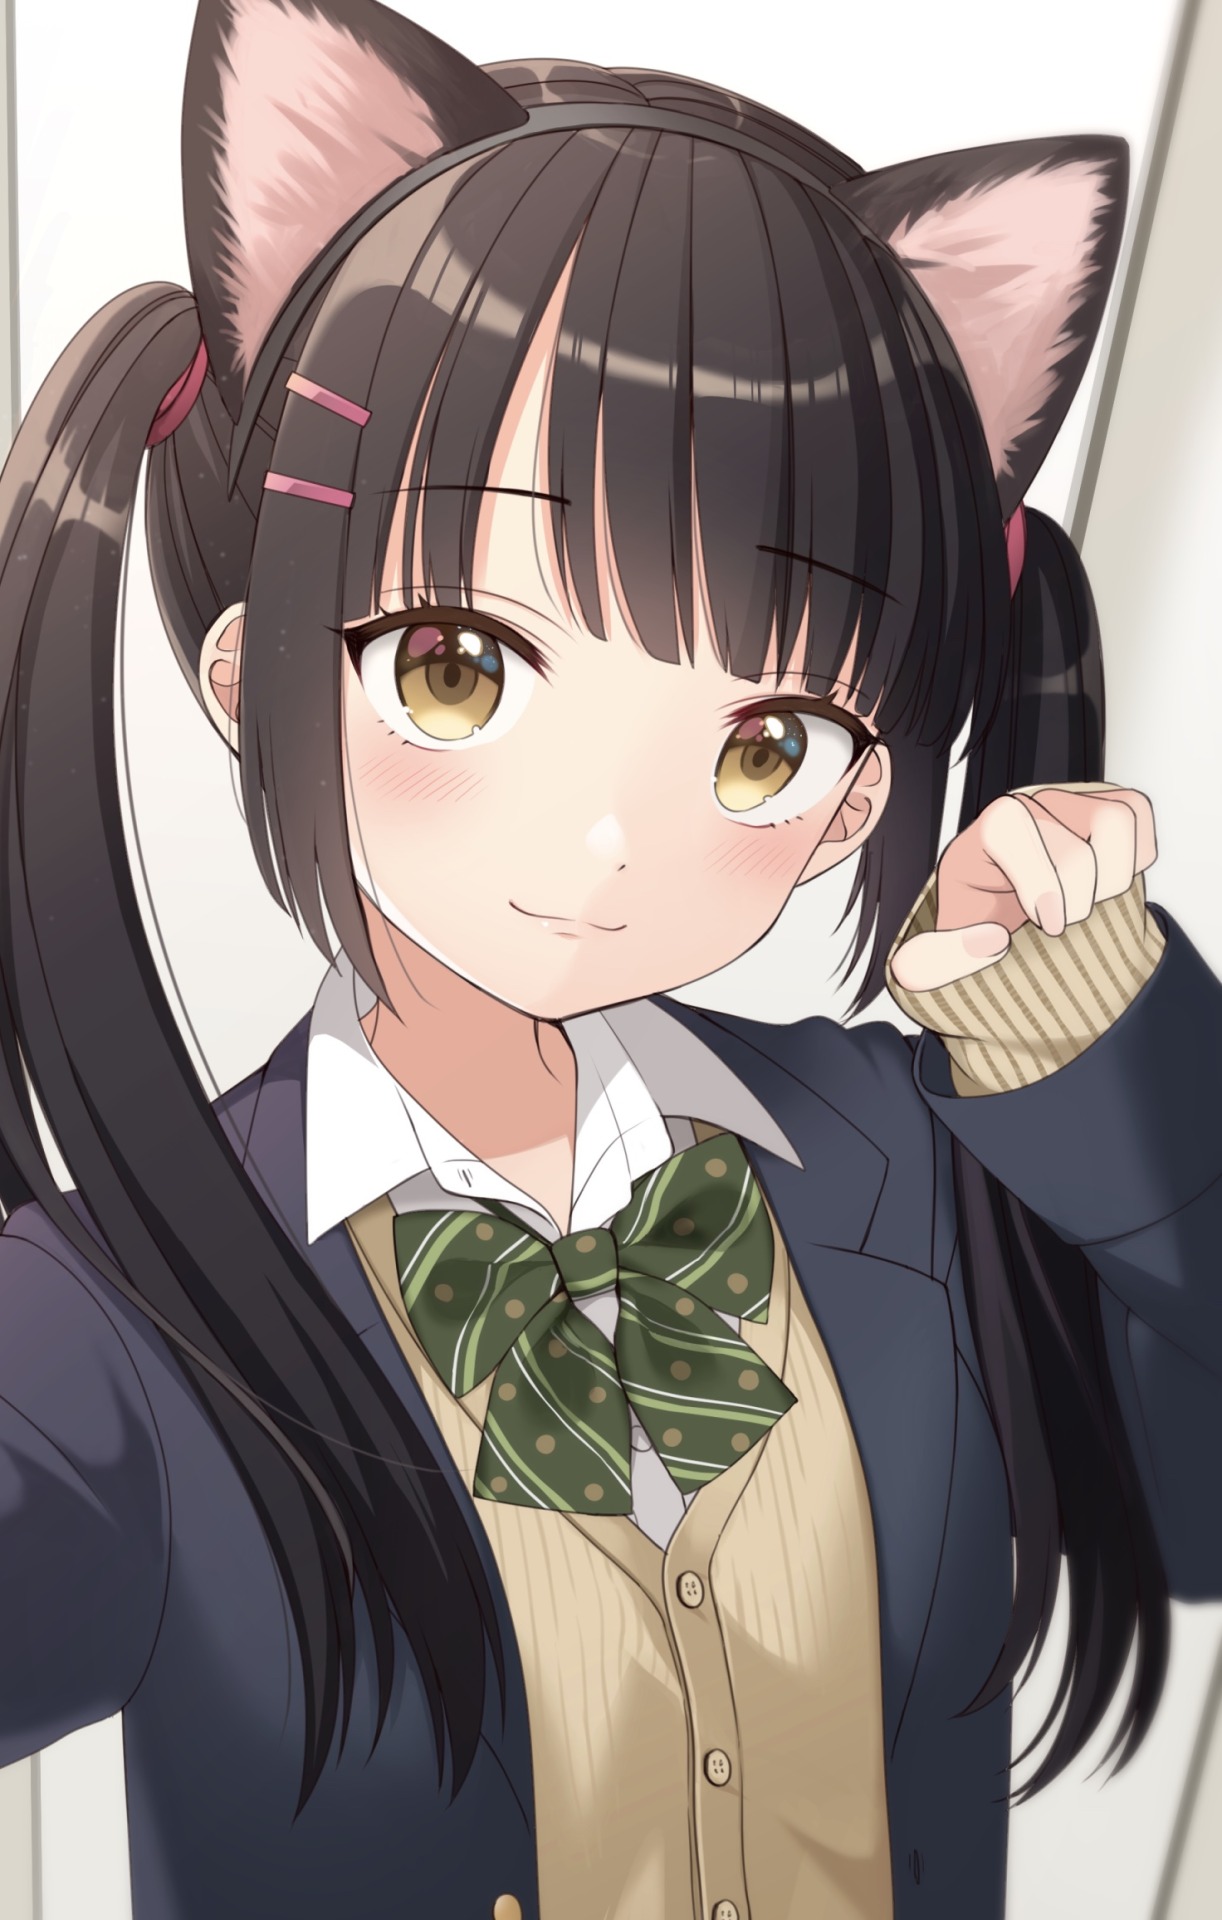 Planet Anime — Cat girl selfie [Original]